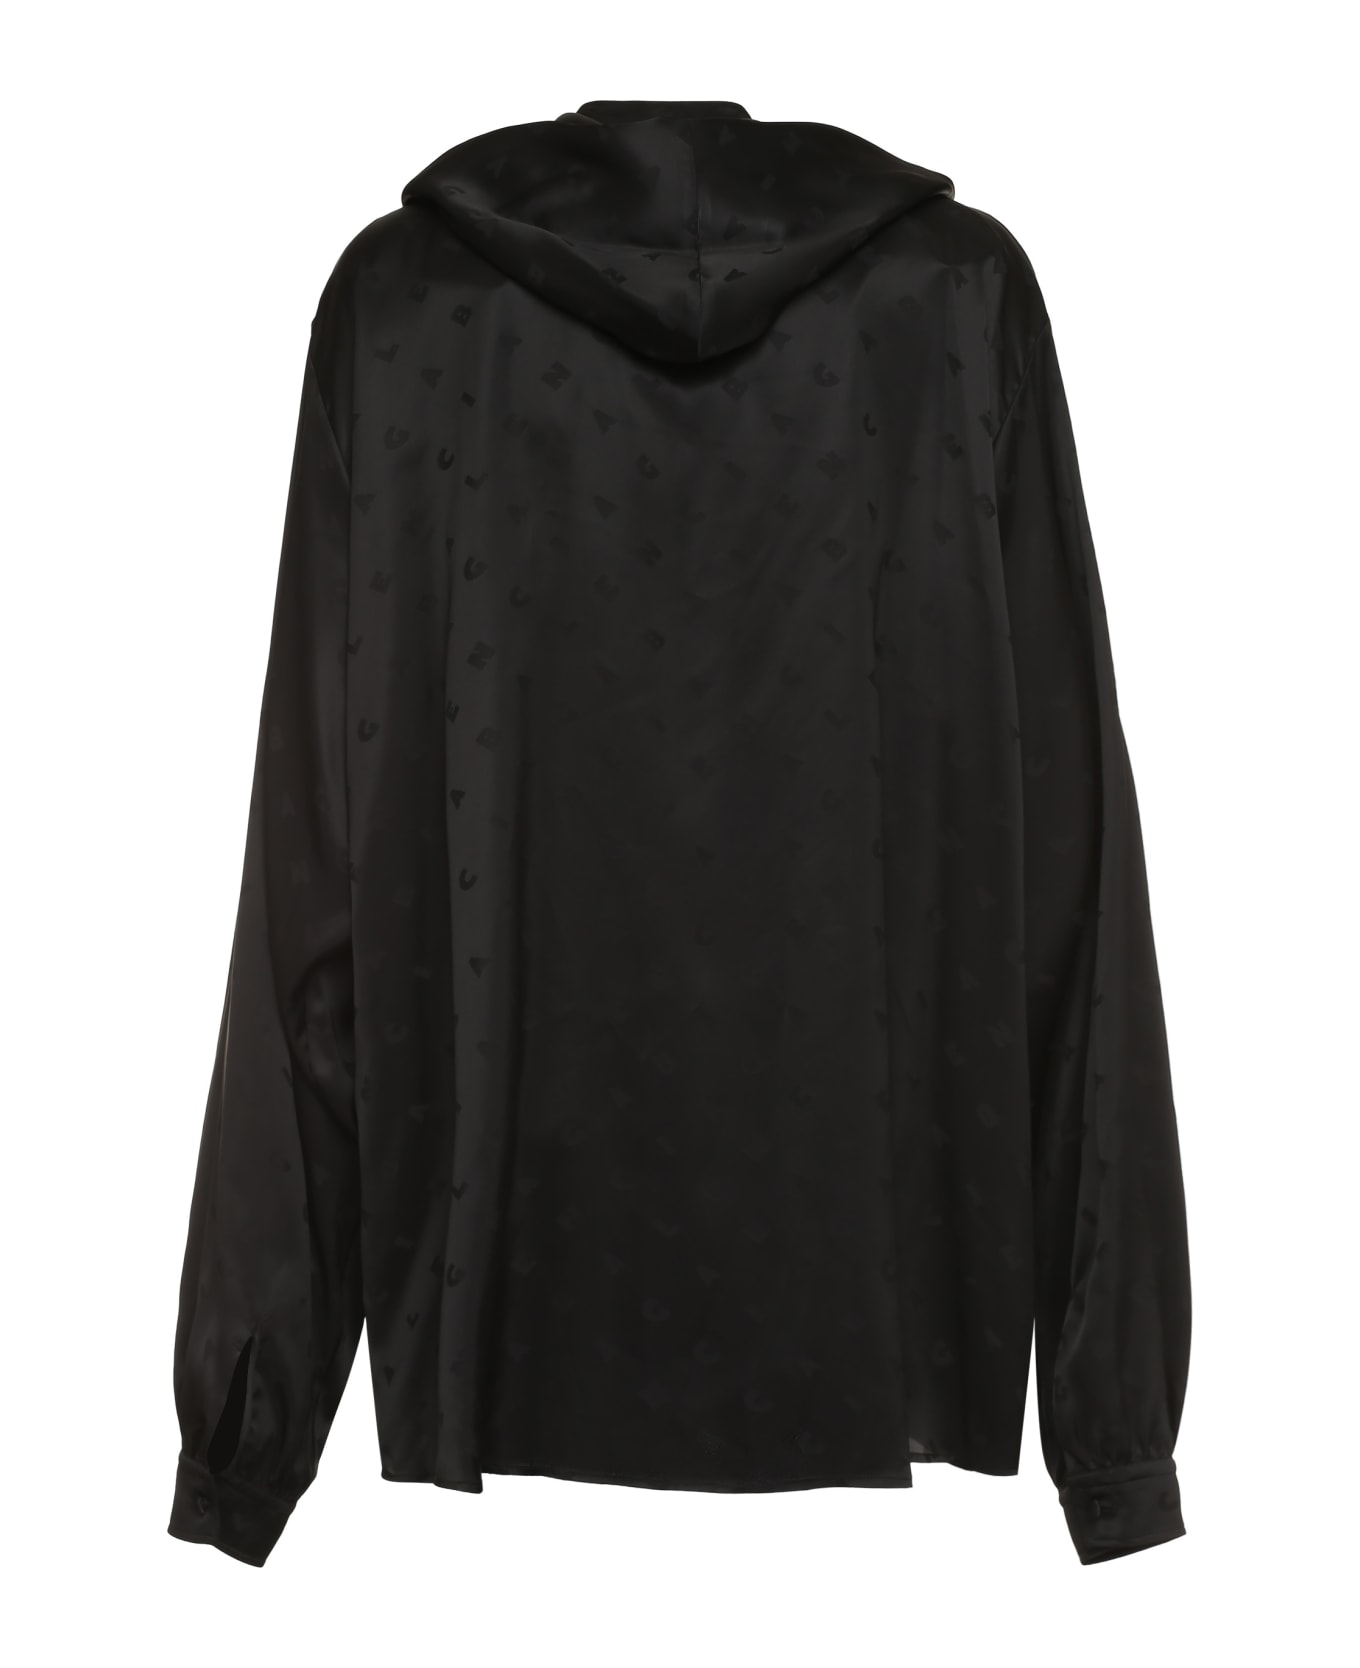 Balenciaga Jacquard Shirt - black ブラウス